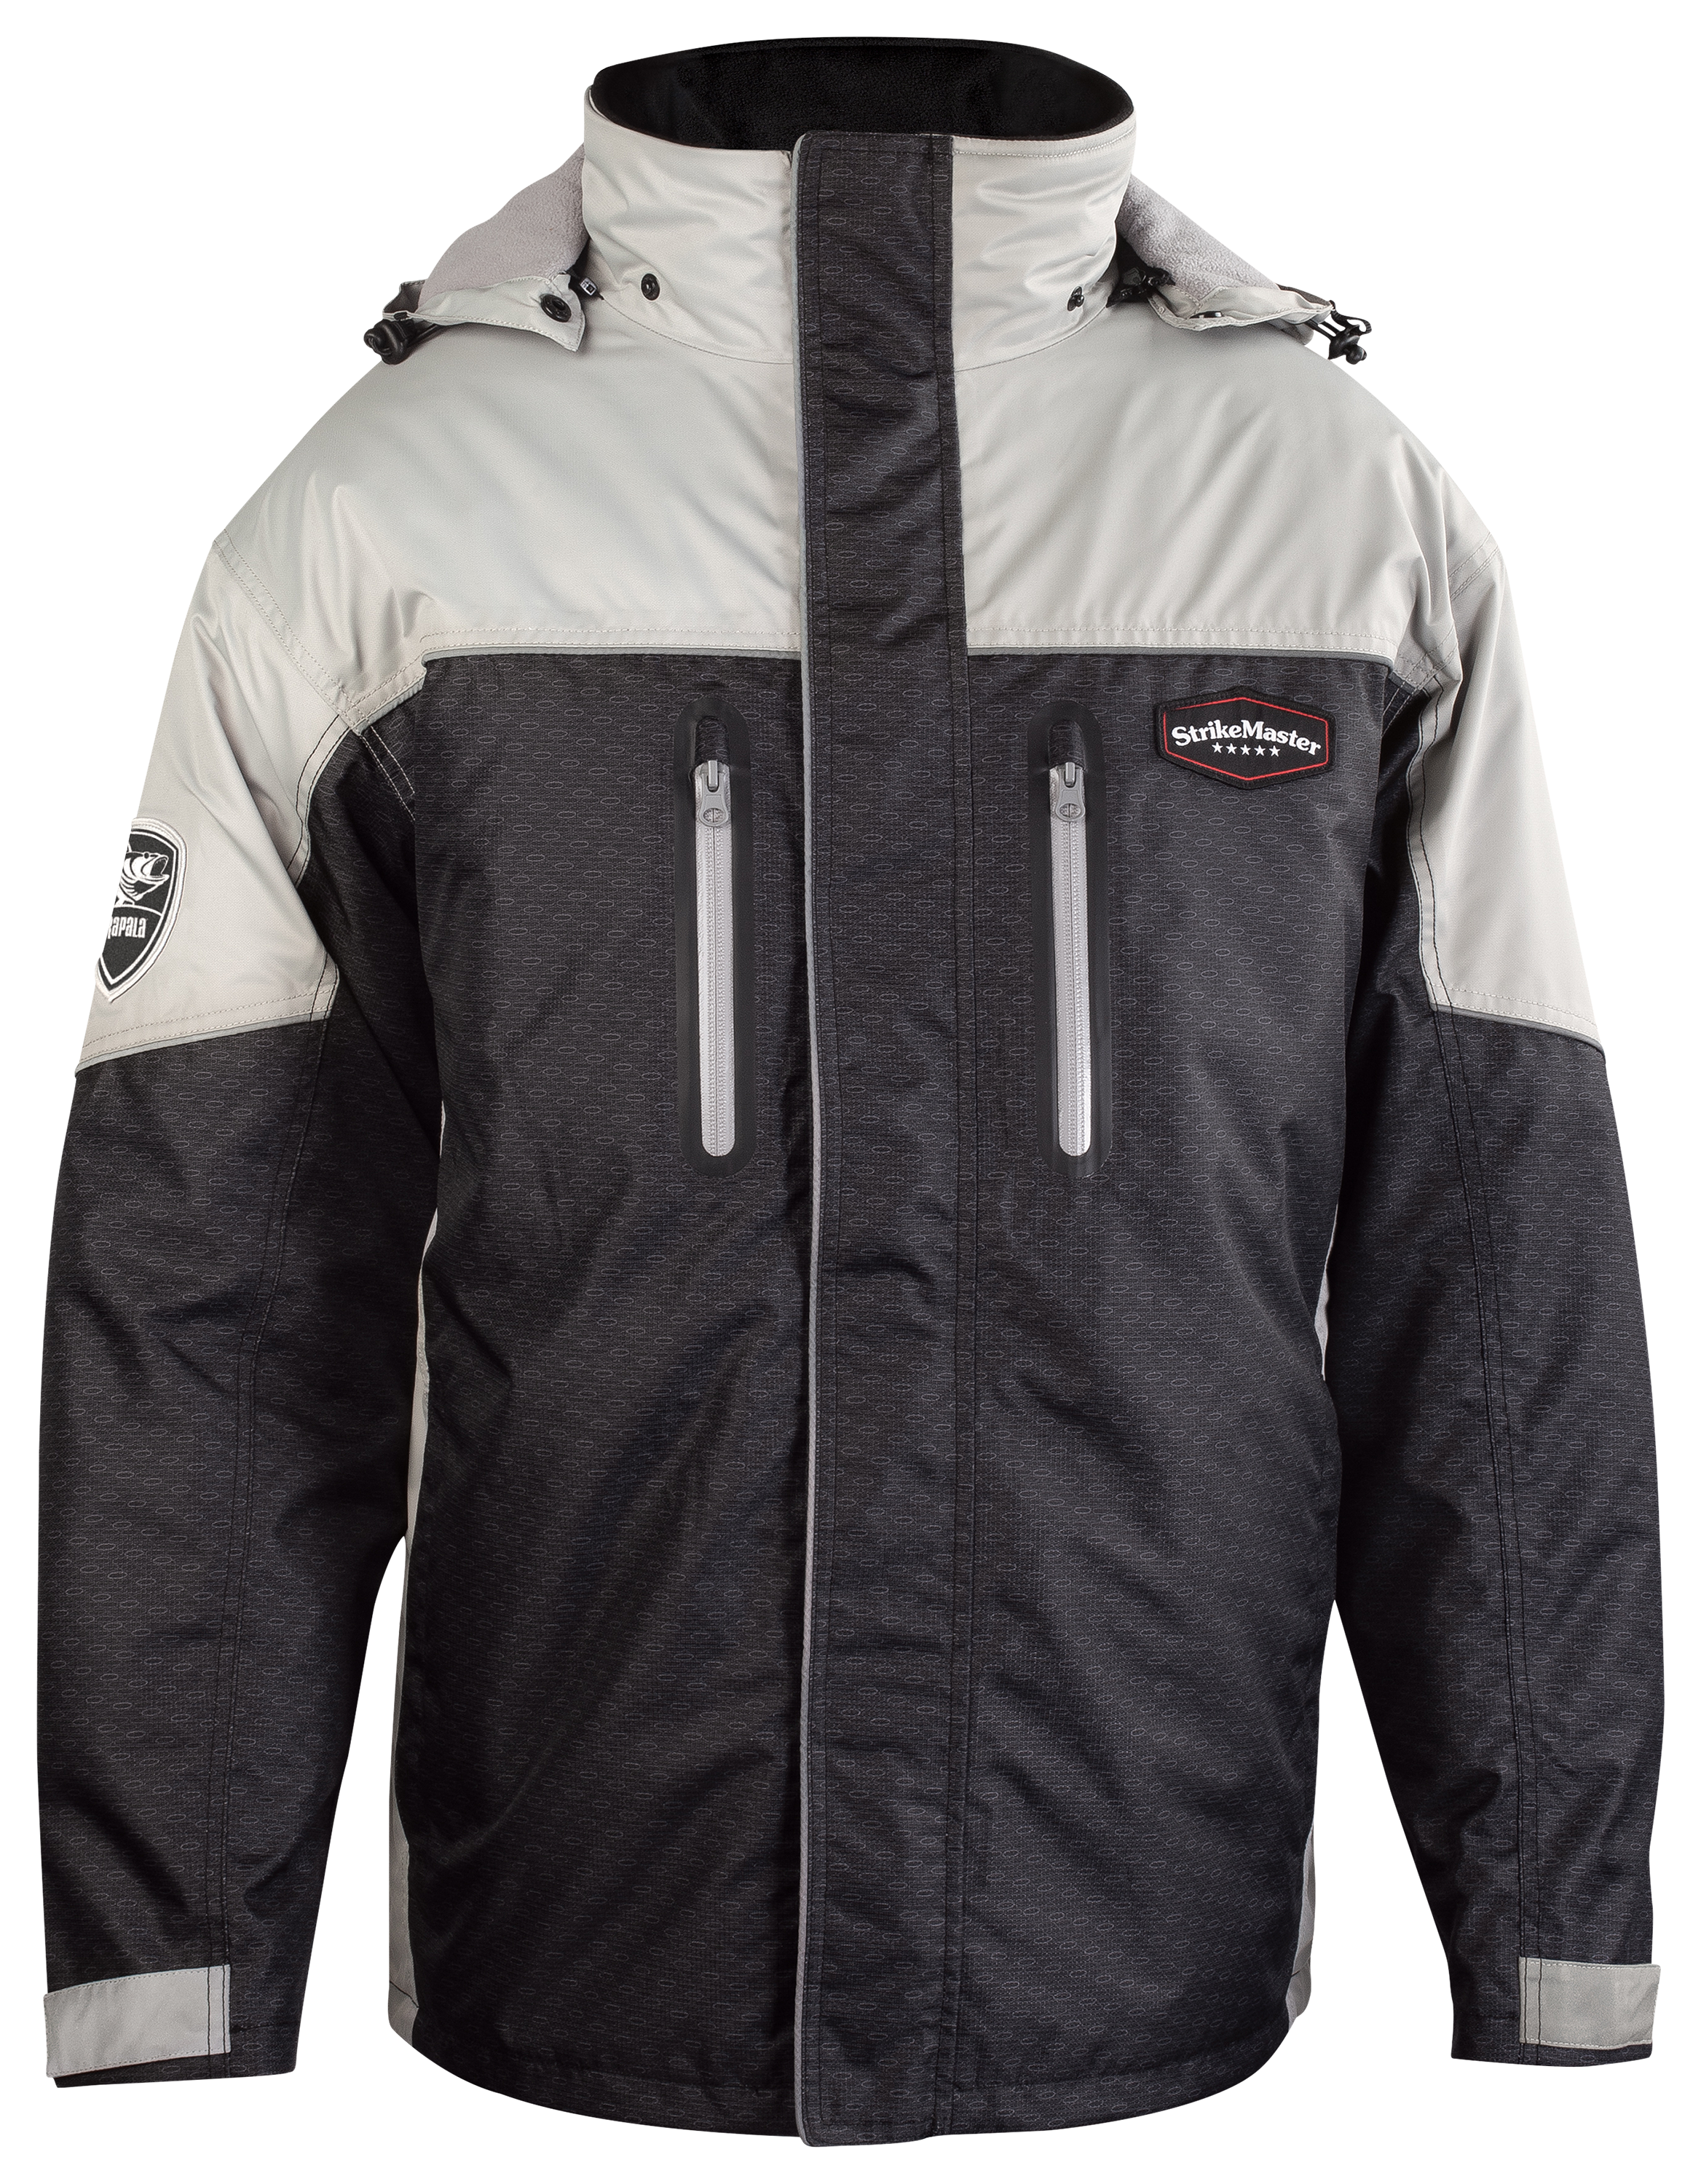 Fishing Jacket For Men Outdoor Fish Jacket Detachable Hooded Tear Resistant  Waterproof Military Style Mountain Jacket Work Coat